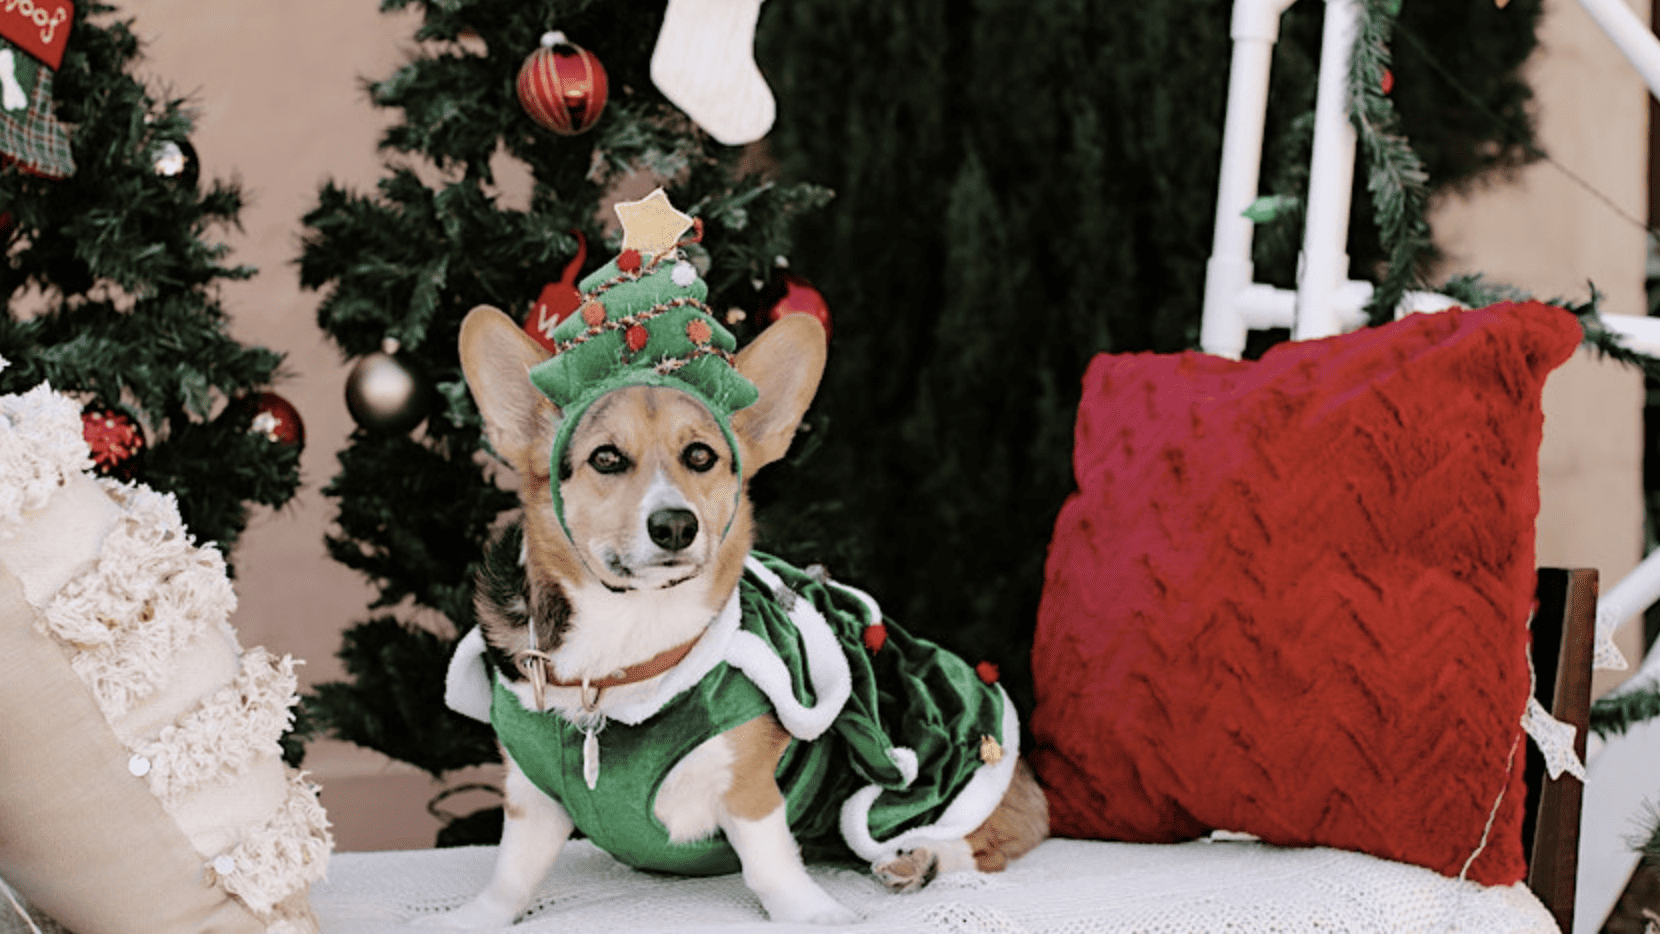 corgi wearing festive Christmas costume